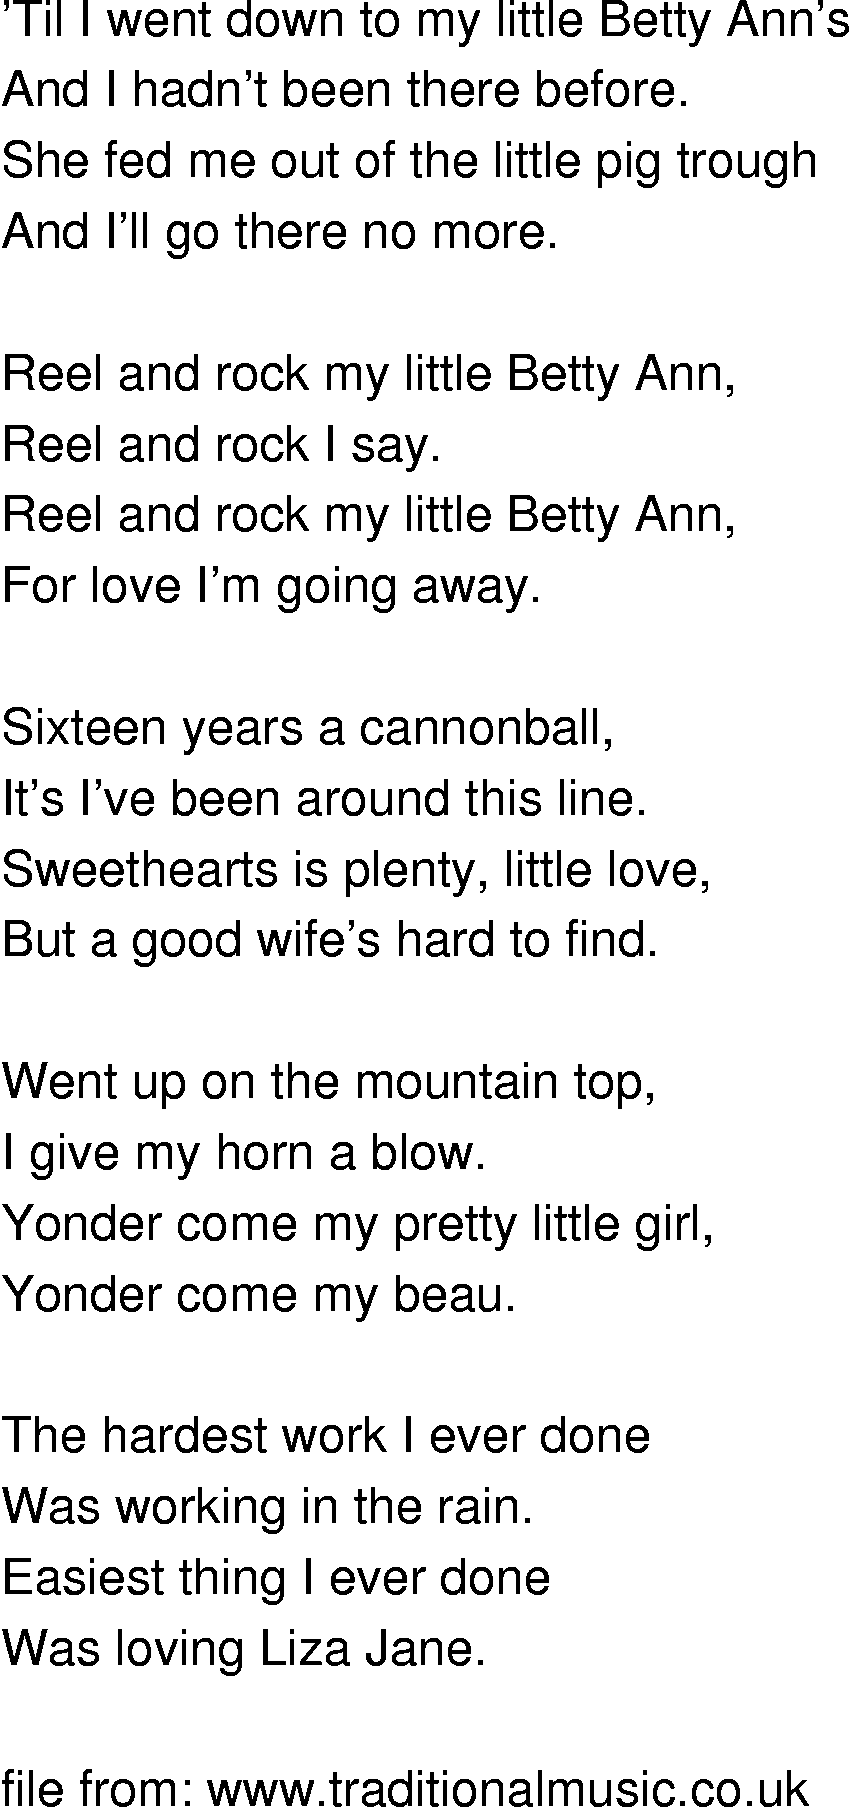 Old-Time (oldtimey) Song Lyrics - little betty ann2